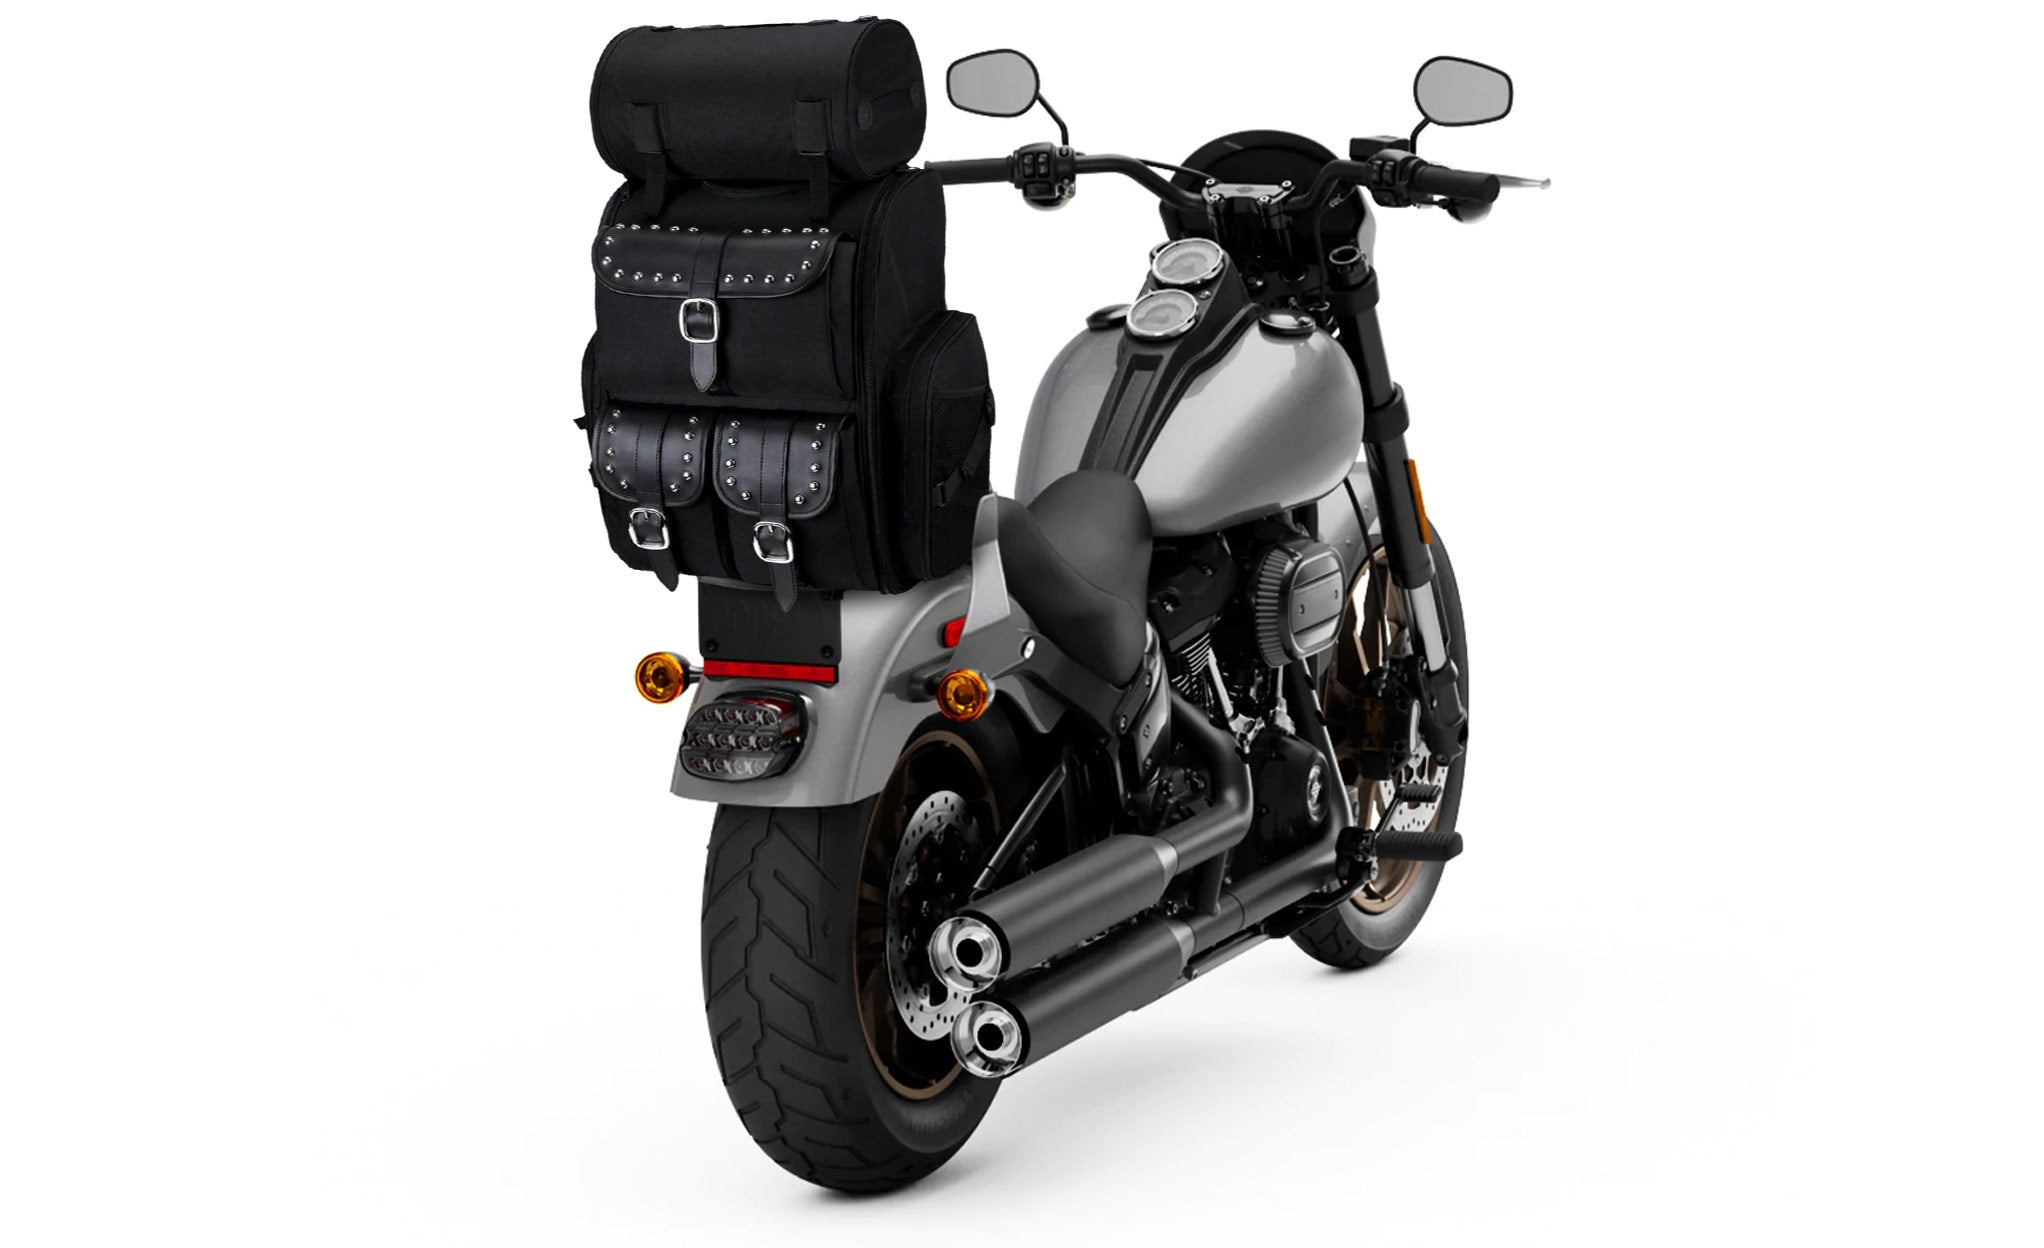 Viking Highway Extra Large Studded Honda Motorcycle Sissy Bar Bag Bag on Bike View @expand